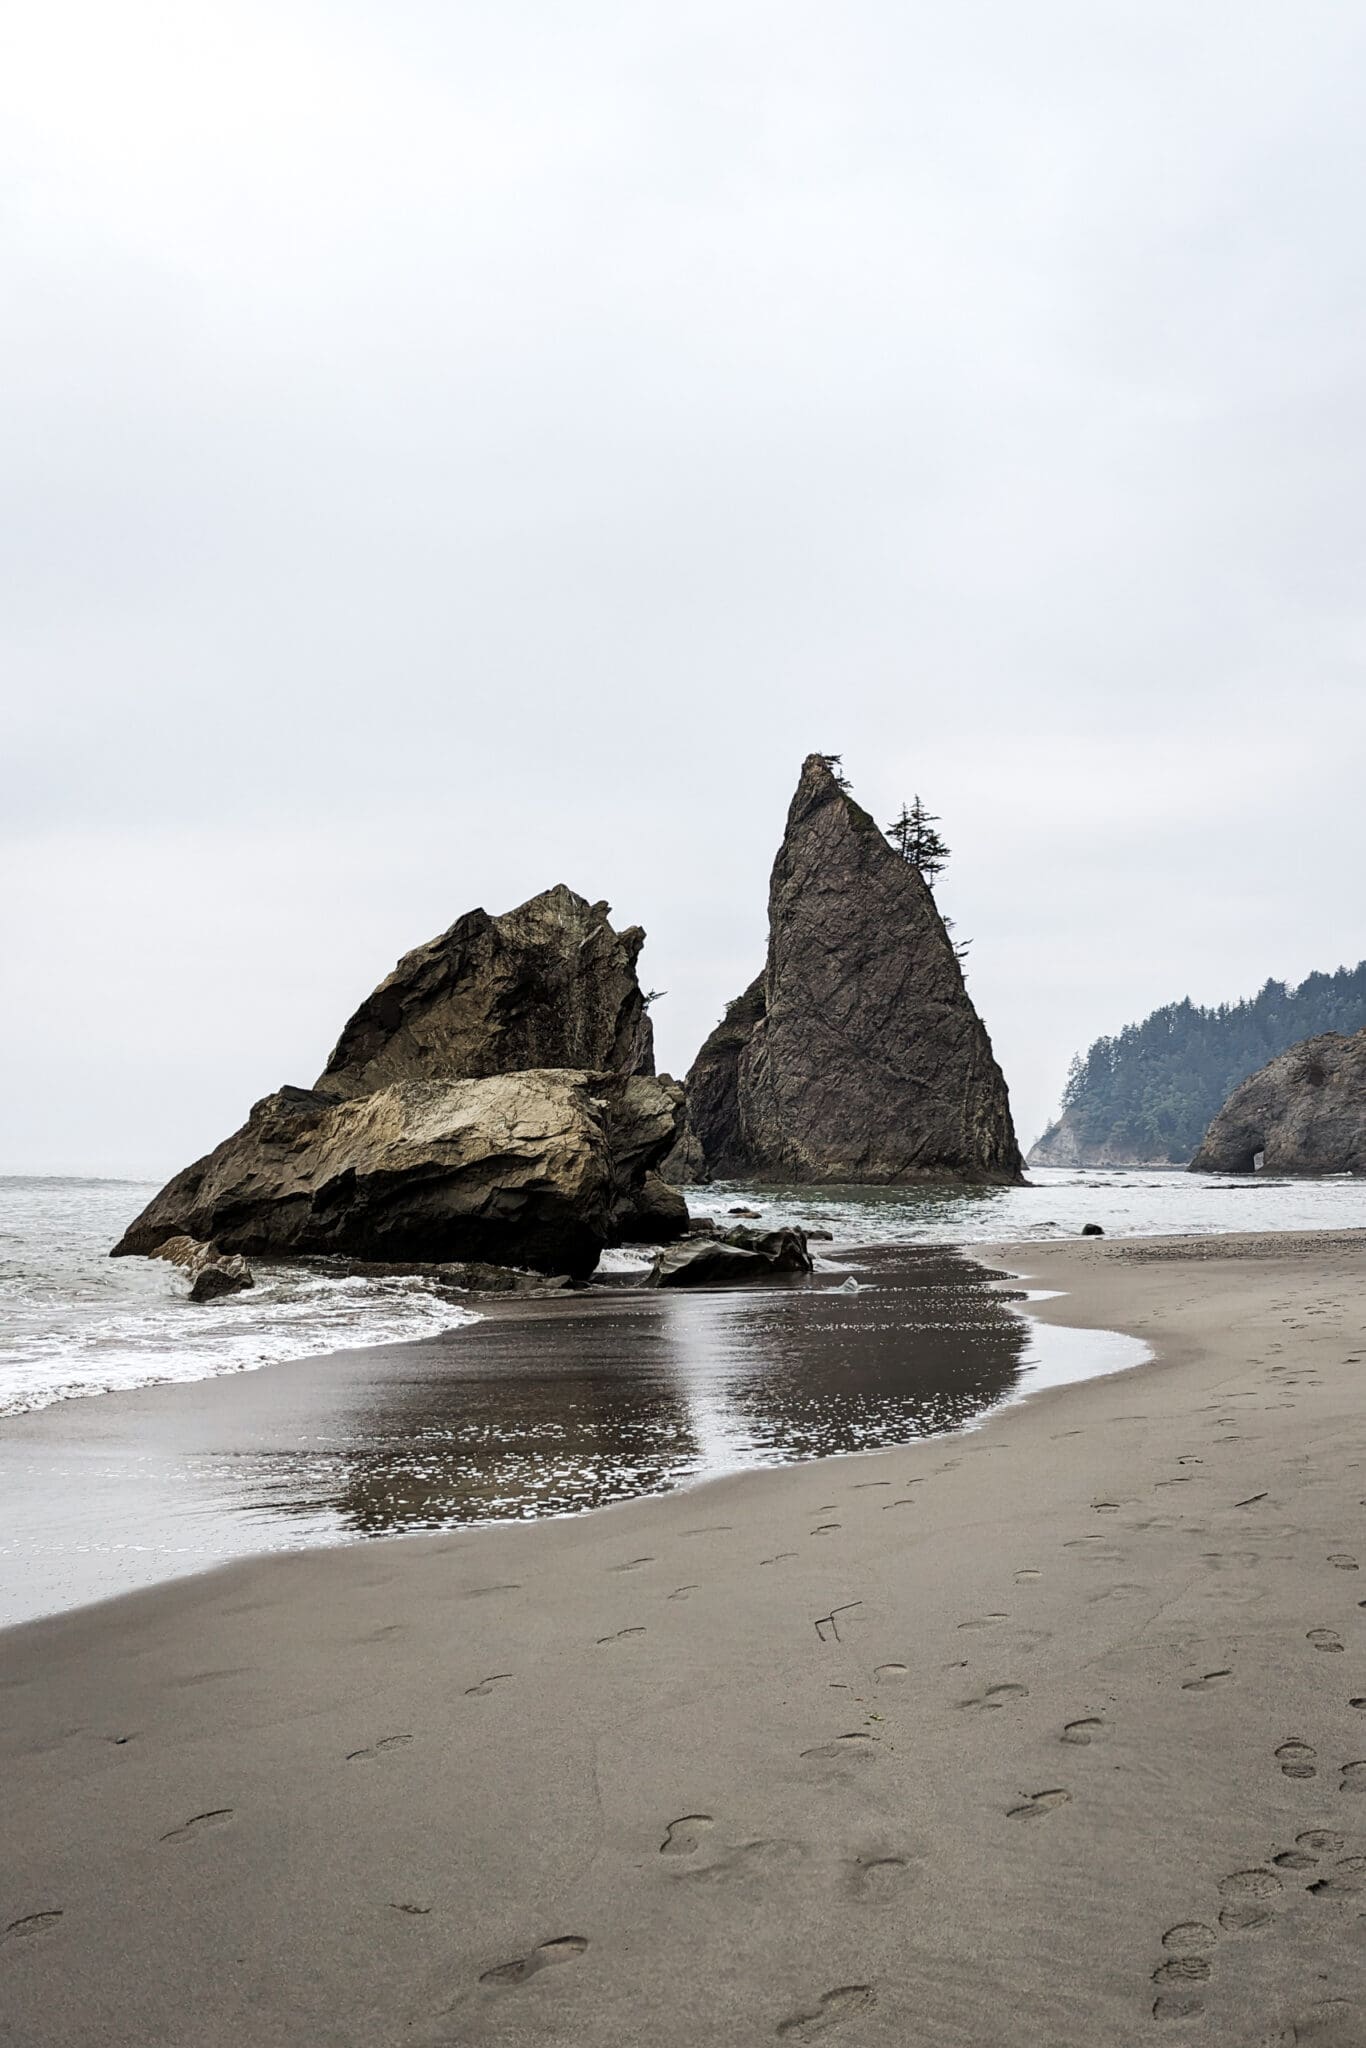 Large rocks on the beach